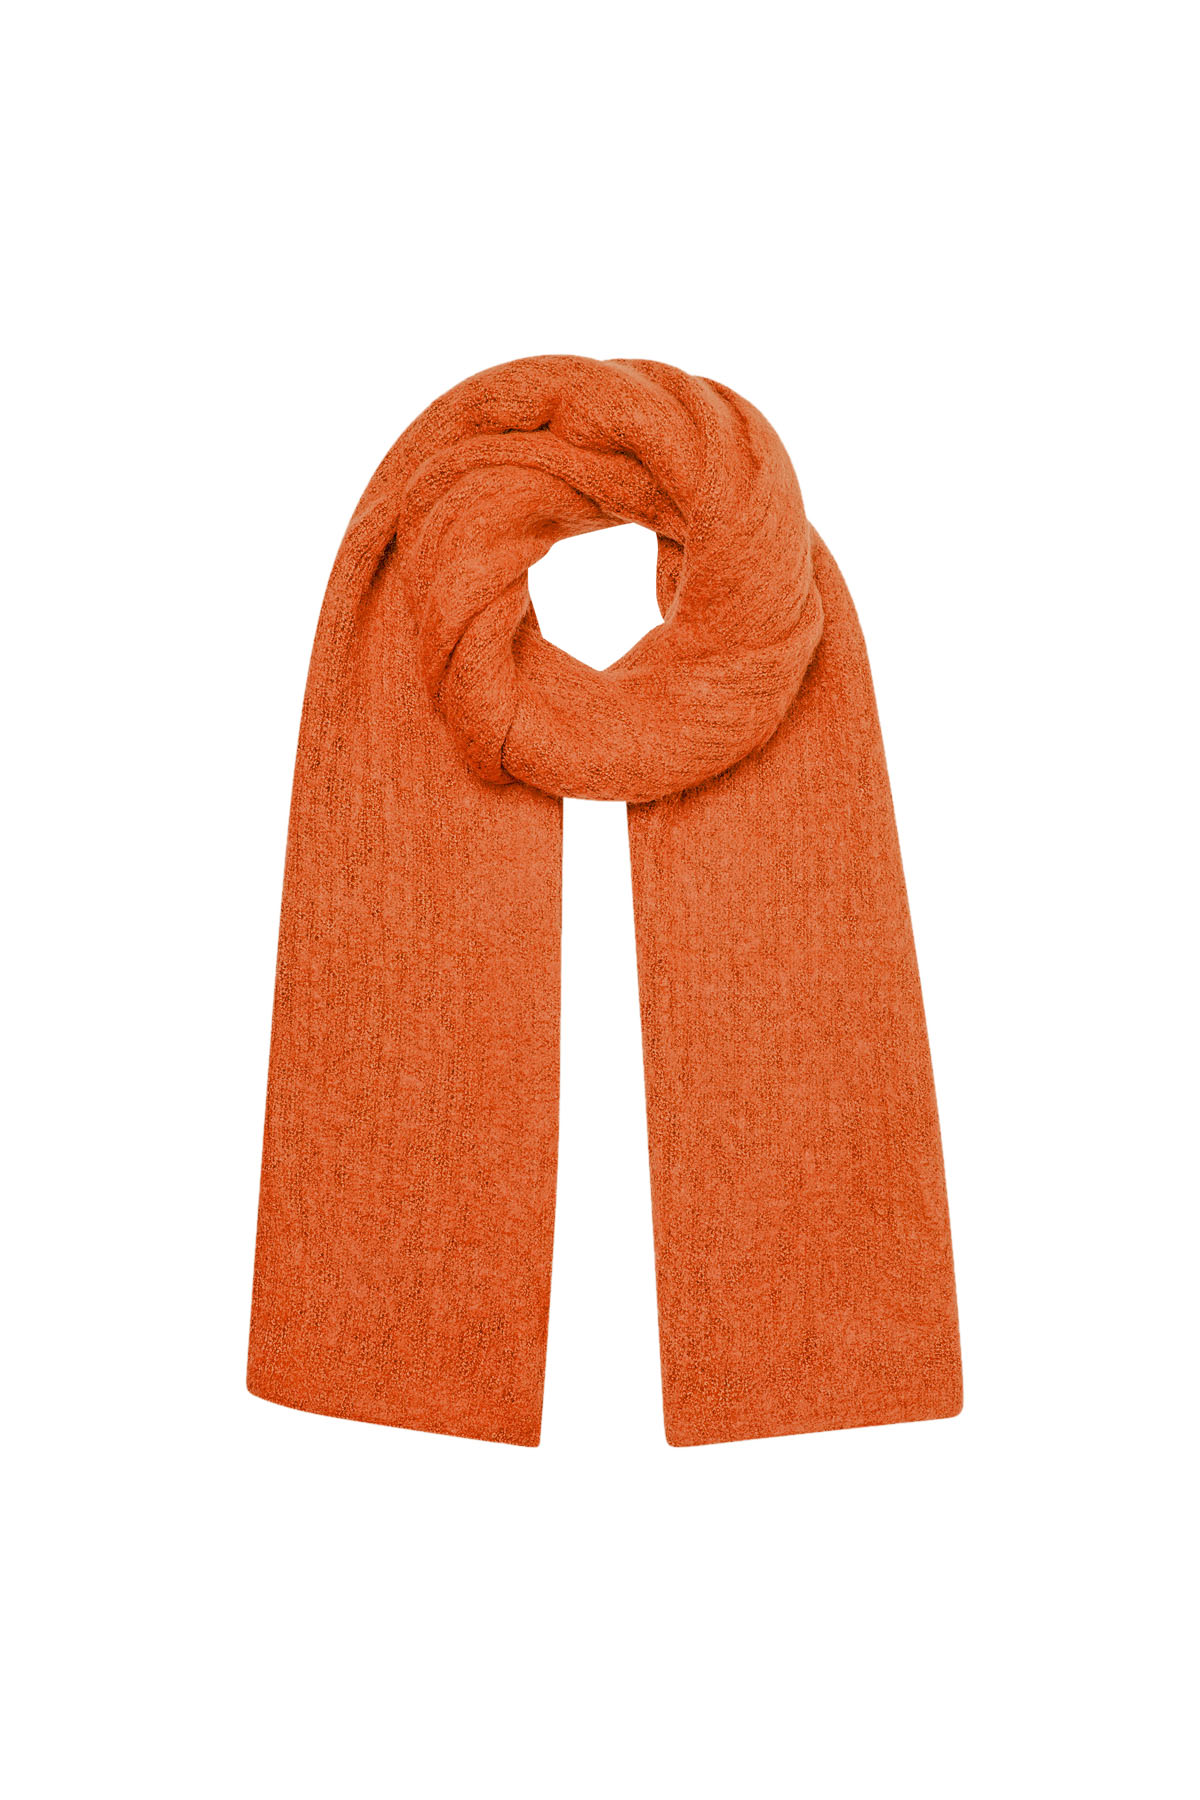 Scarf knitted plain - orange 